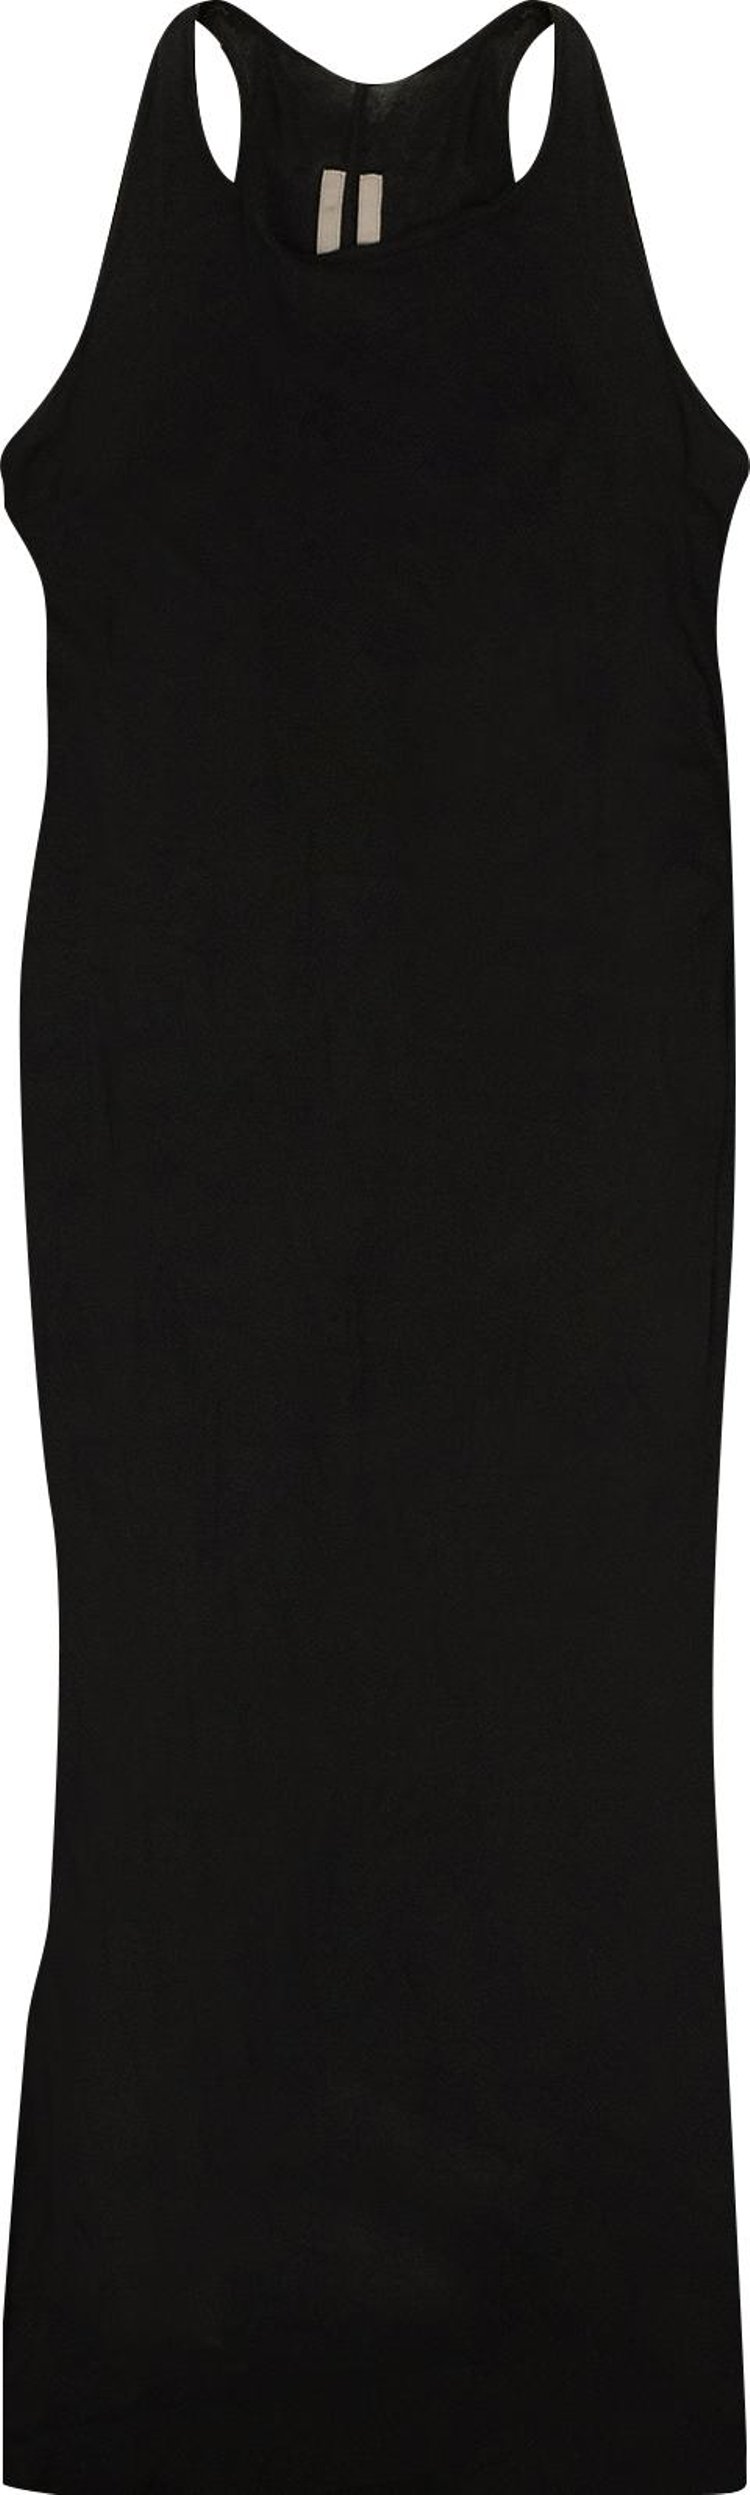 Rick Owens Tank Dress 'Black'